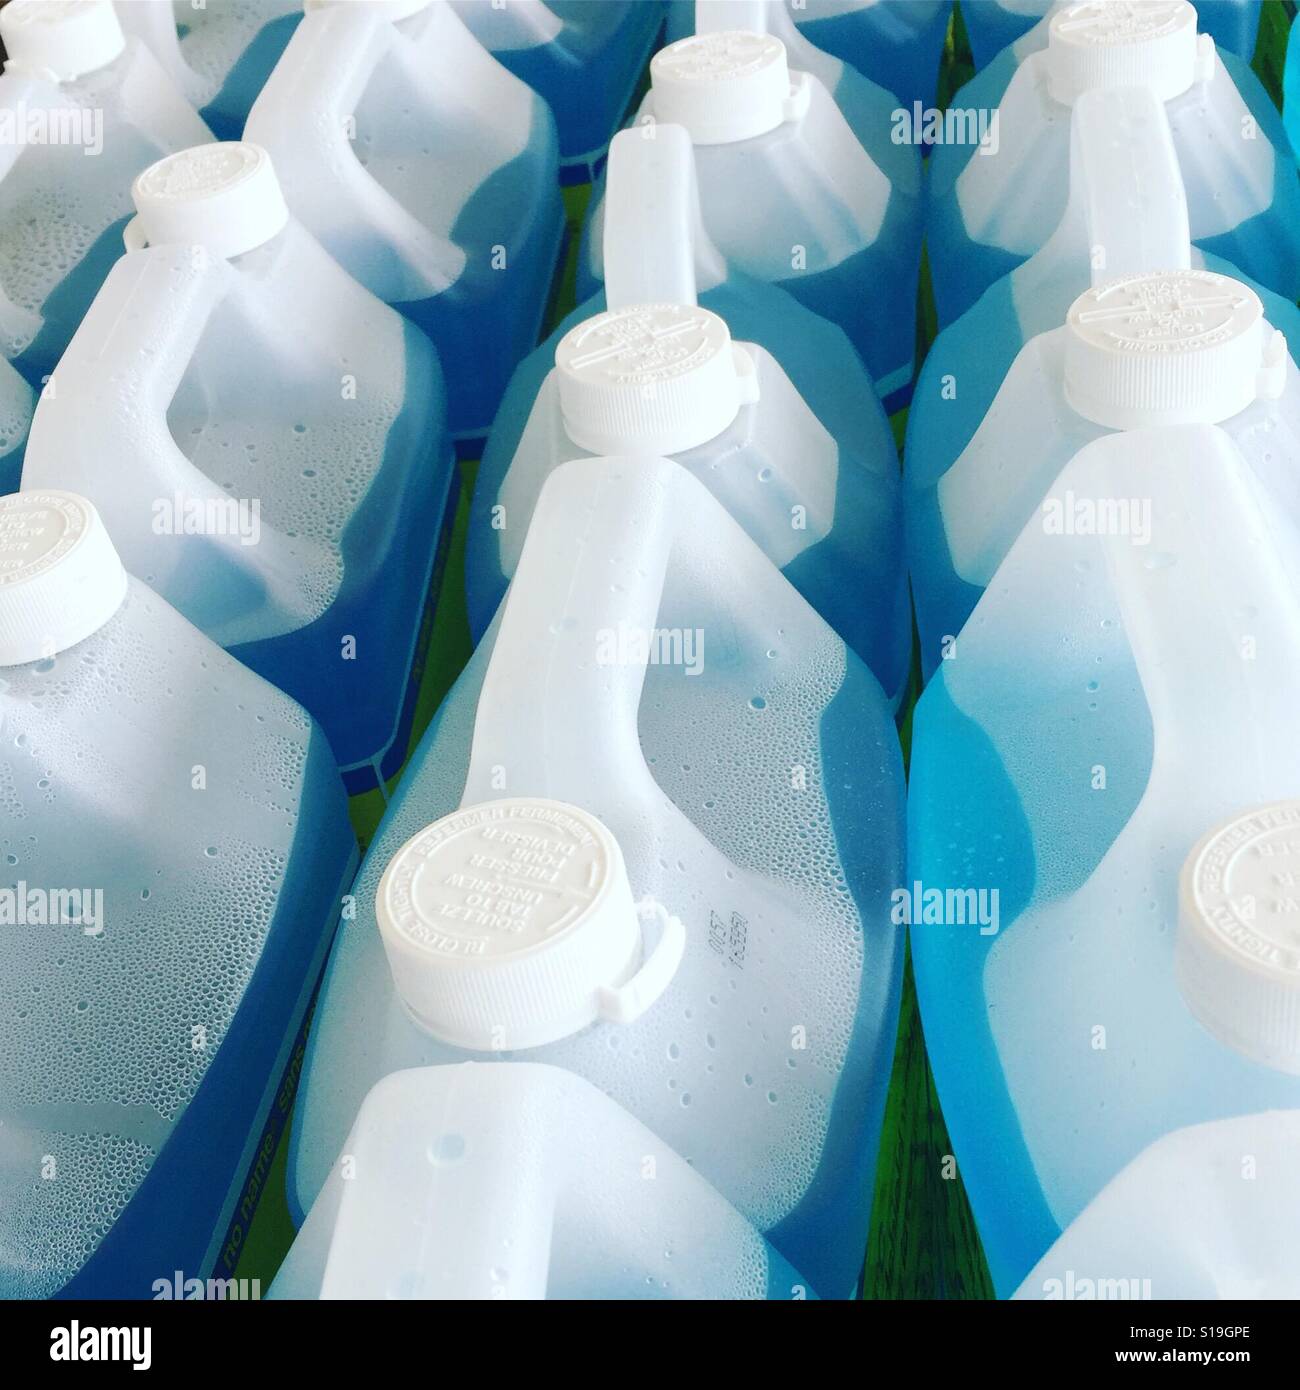 Antifreeze bottles by K.R. Stock Photo